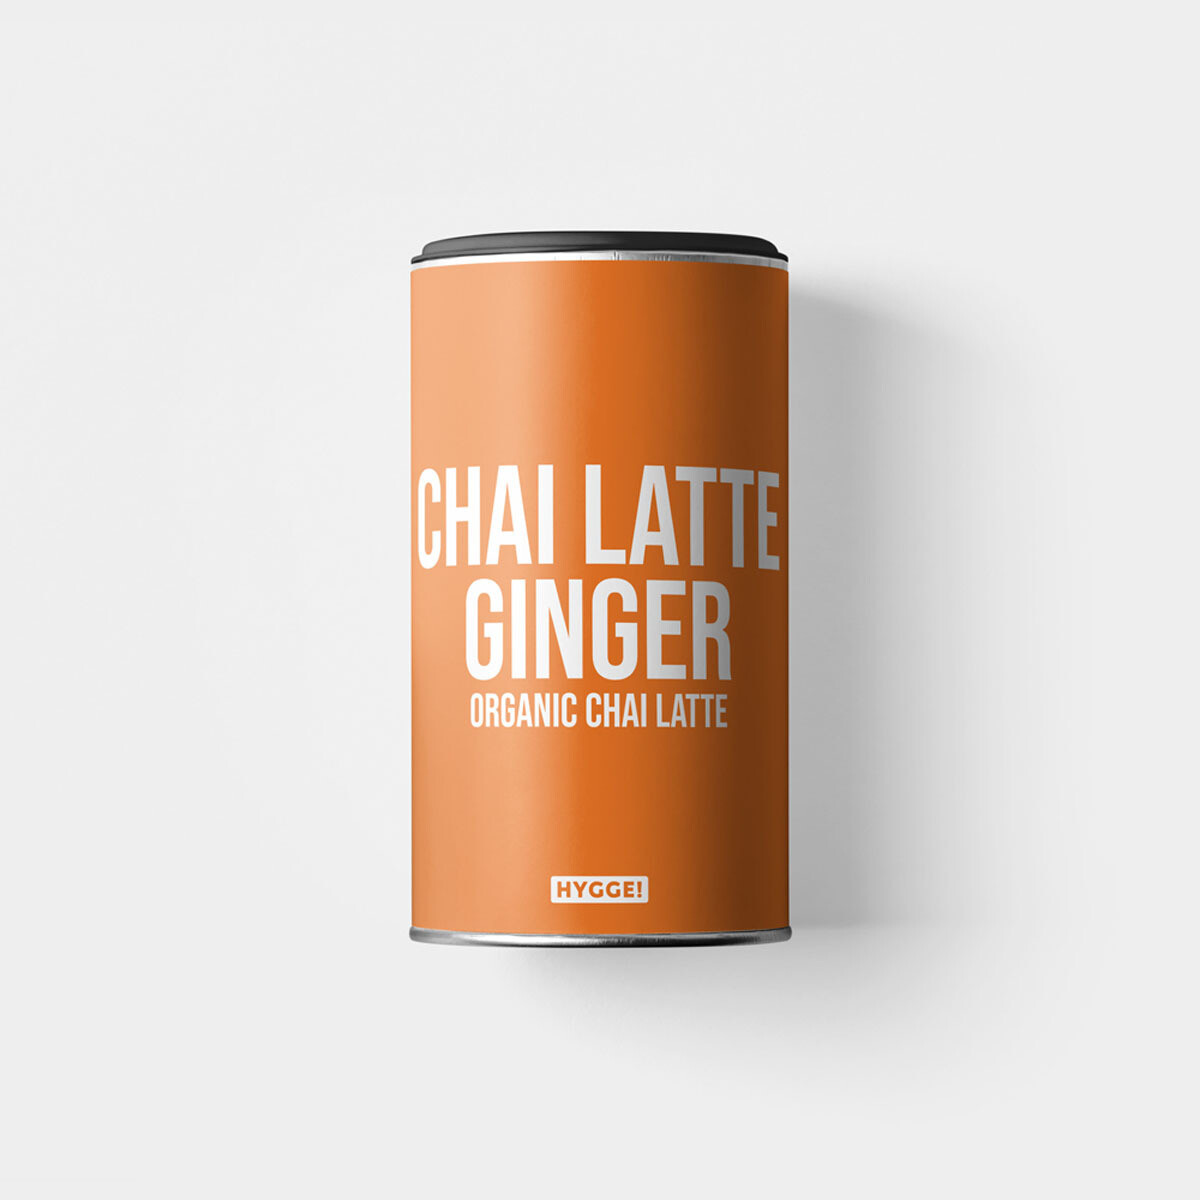 Chai Latte Ginger Bio